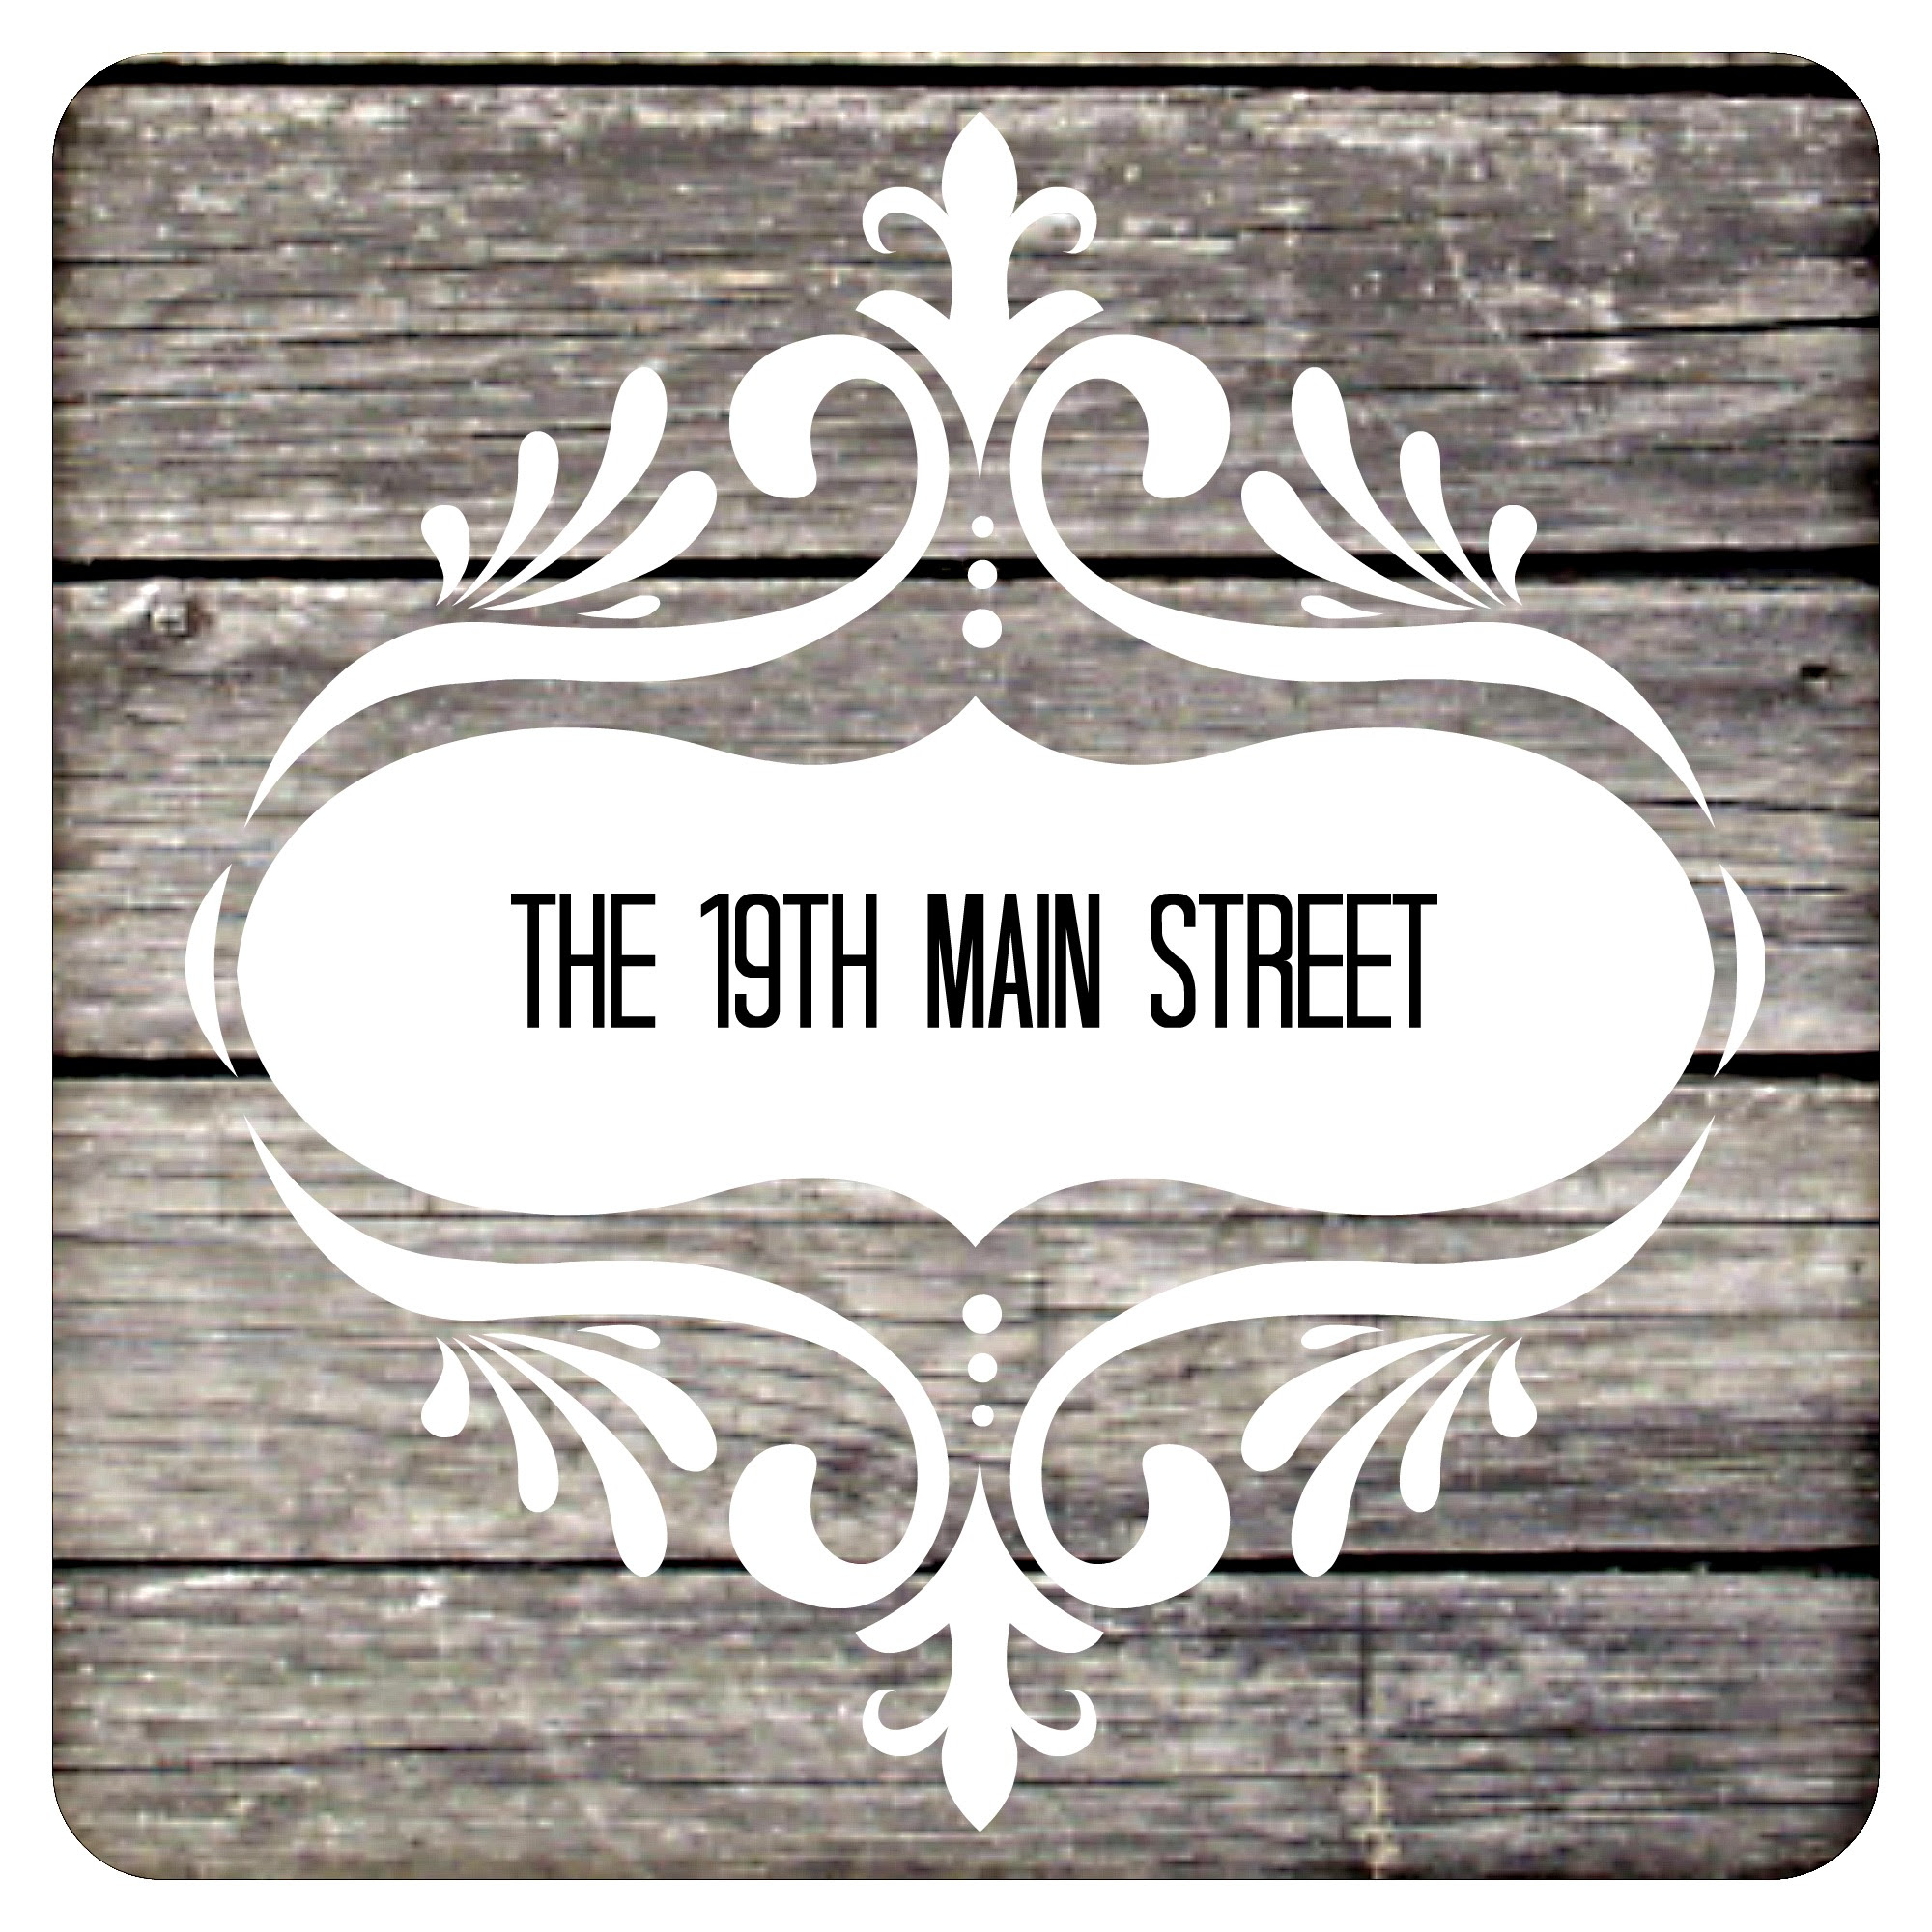 The 19th Main Street